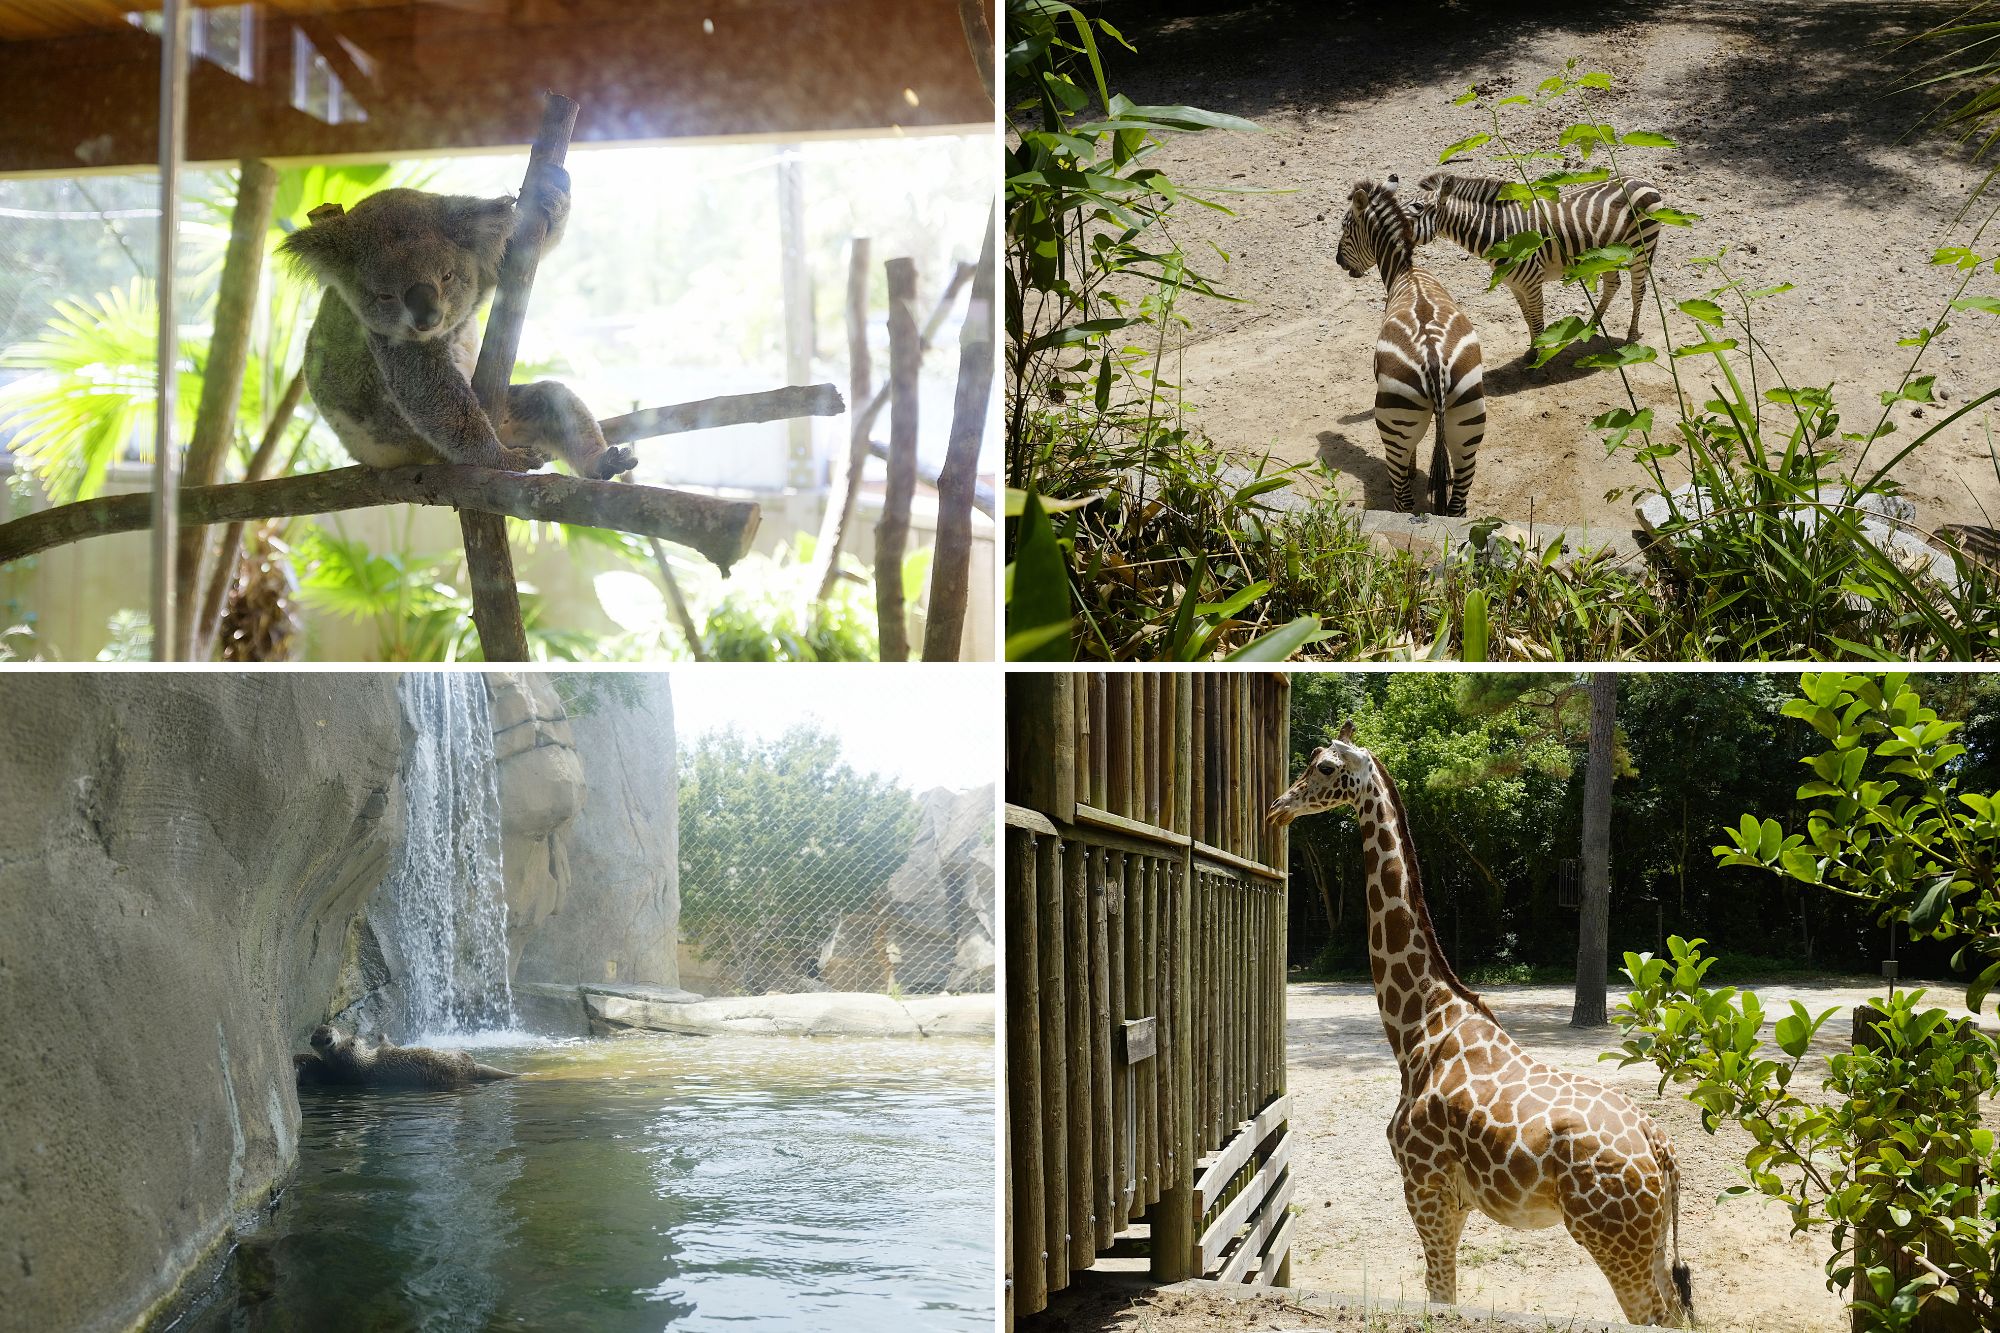 Koala, Zebras, Giraffe, and Otters at the Zoo